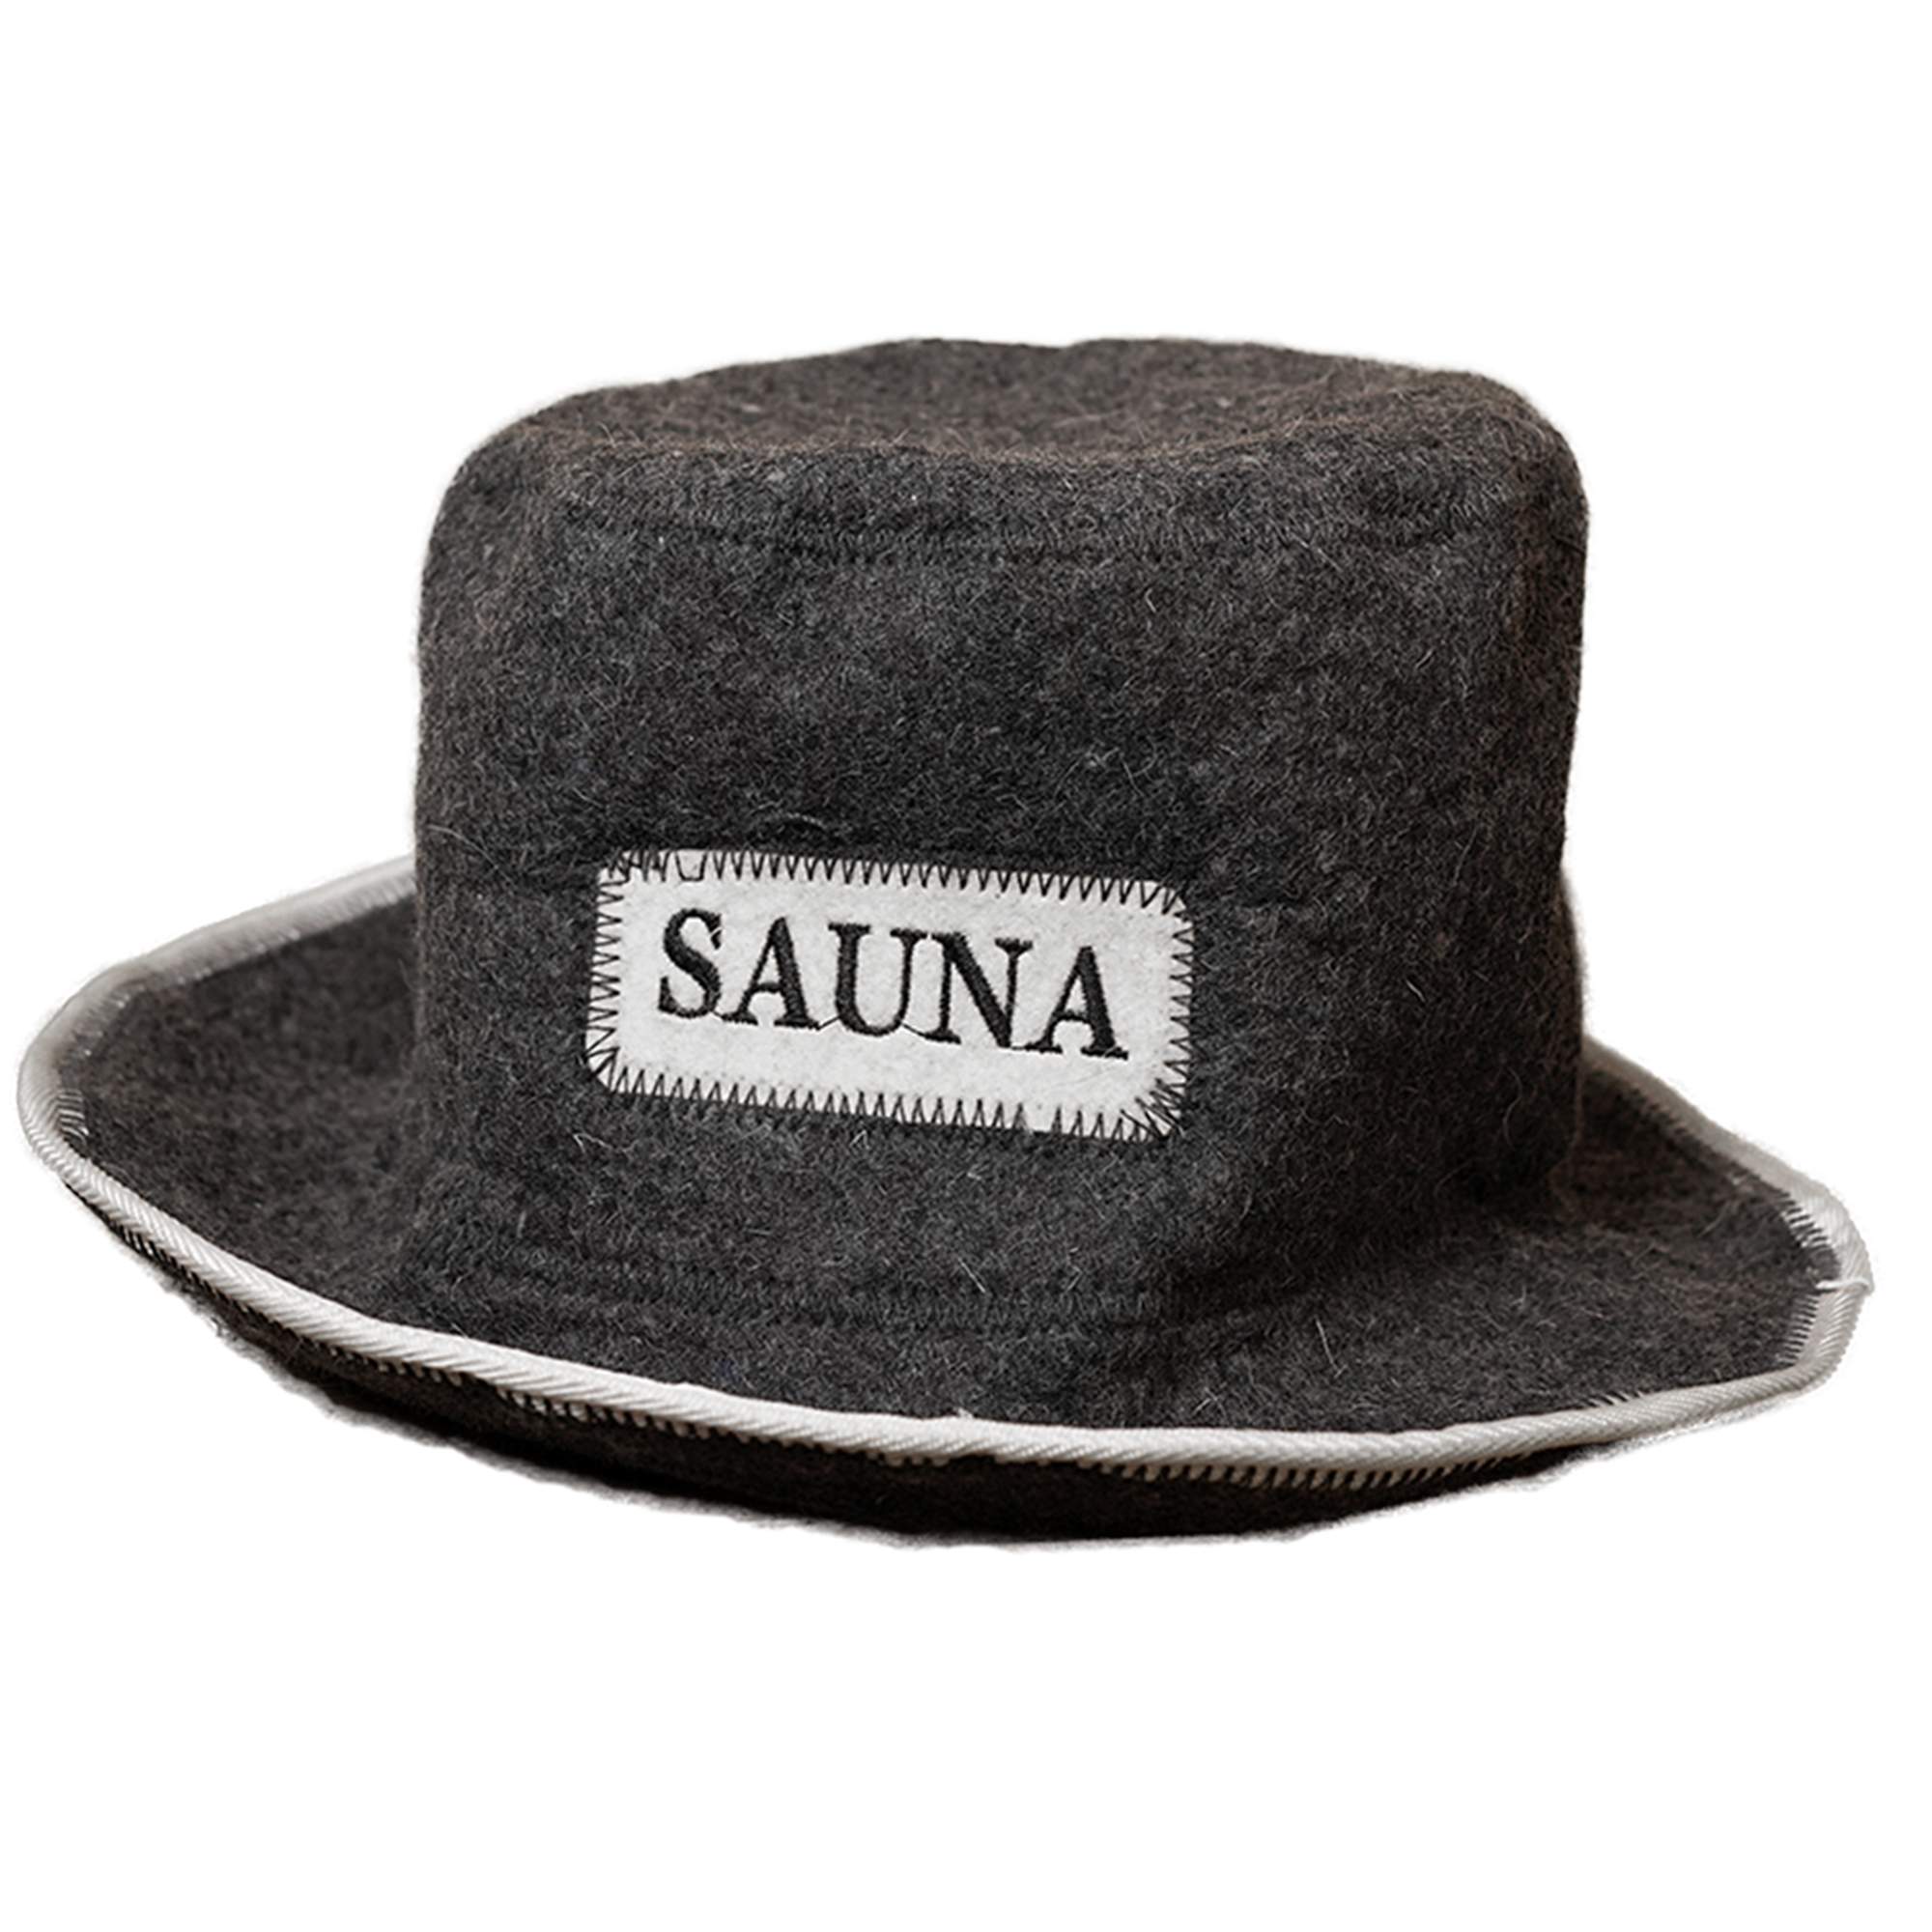 Klobúk do sauny s nápisom SAUNA - šedý